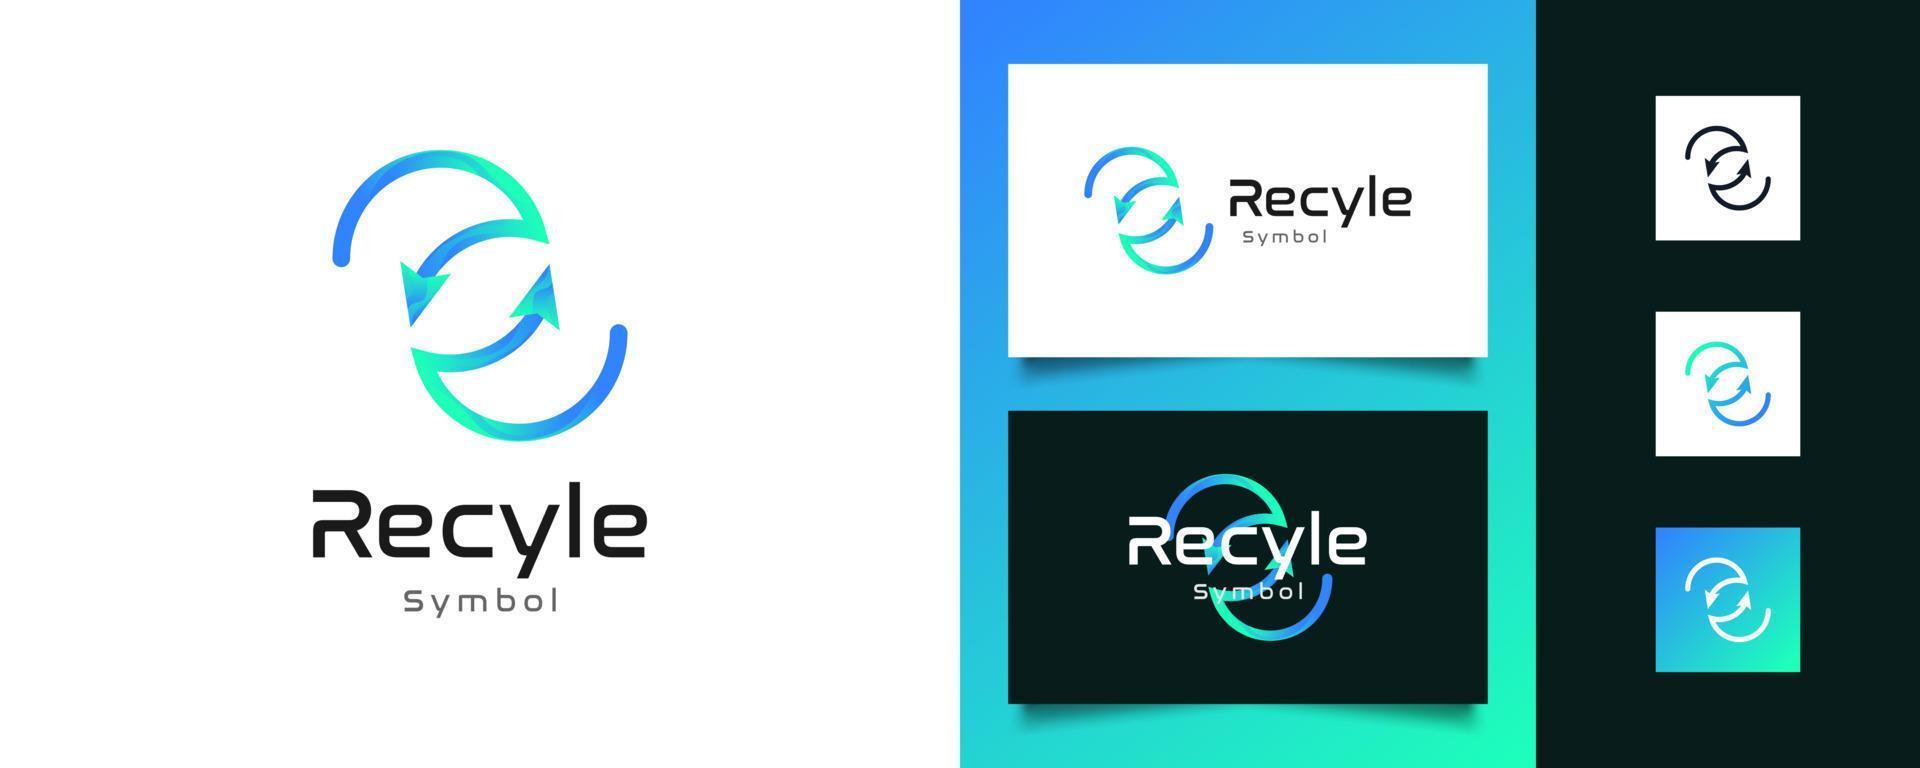 Modernes Recycling-Logo oder -Symbol mit blauem und grünem Farbverlauf. Recycling- oder Rotationspfeil-Logo vektor